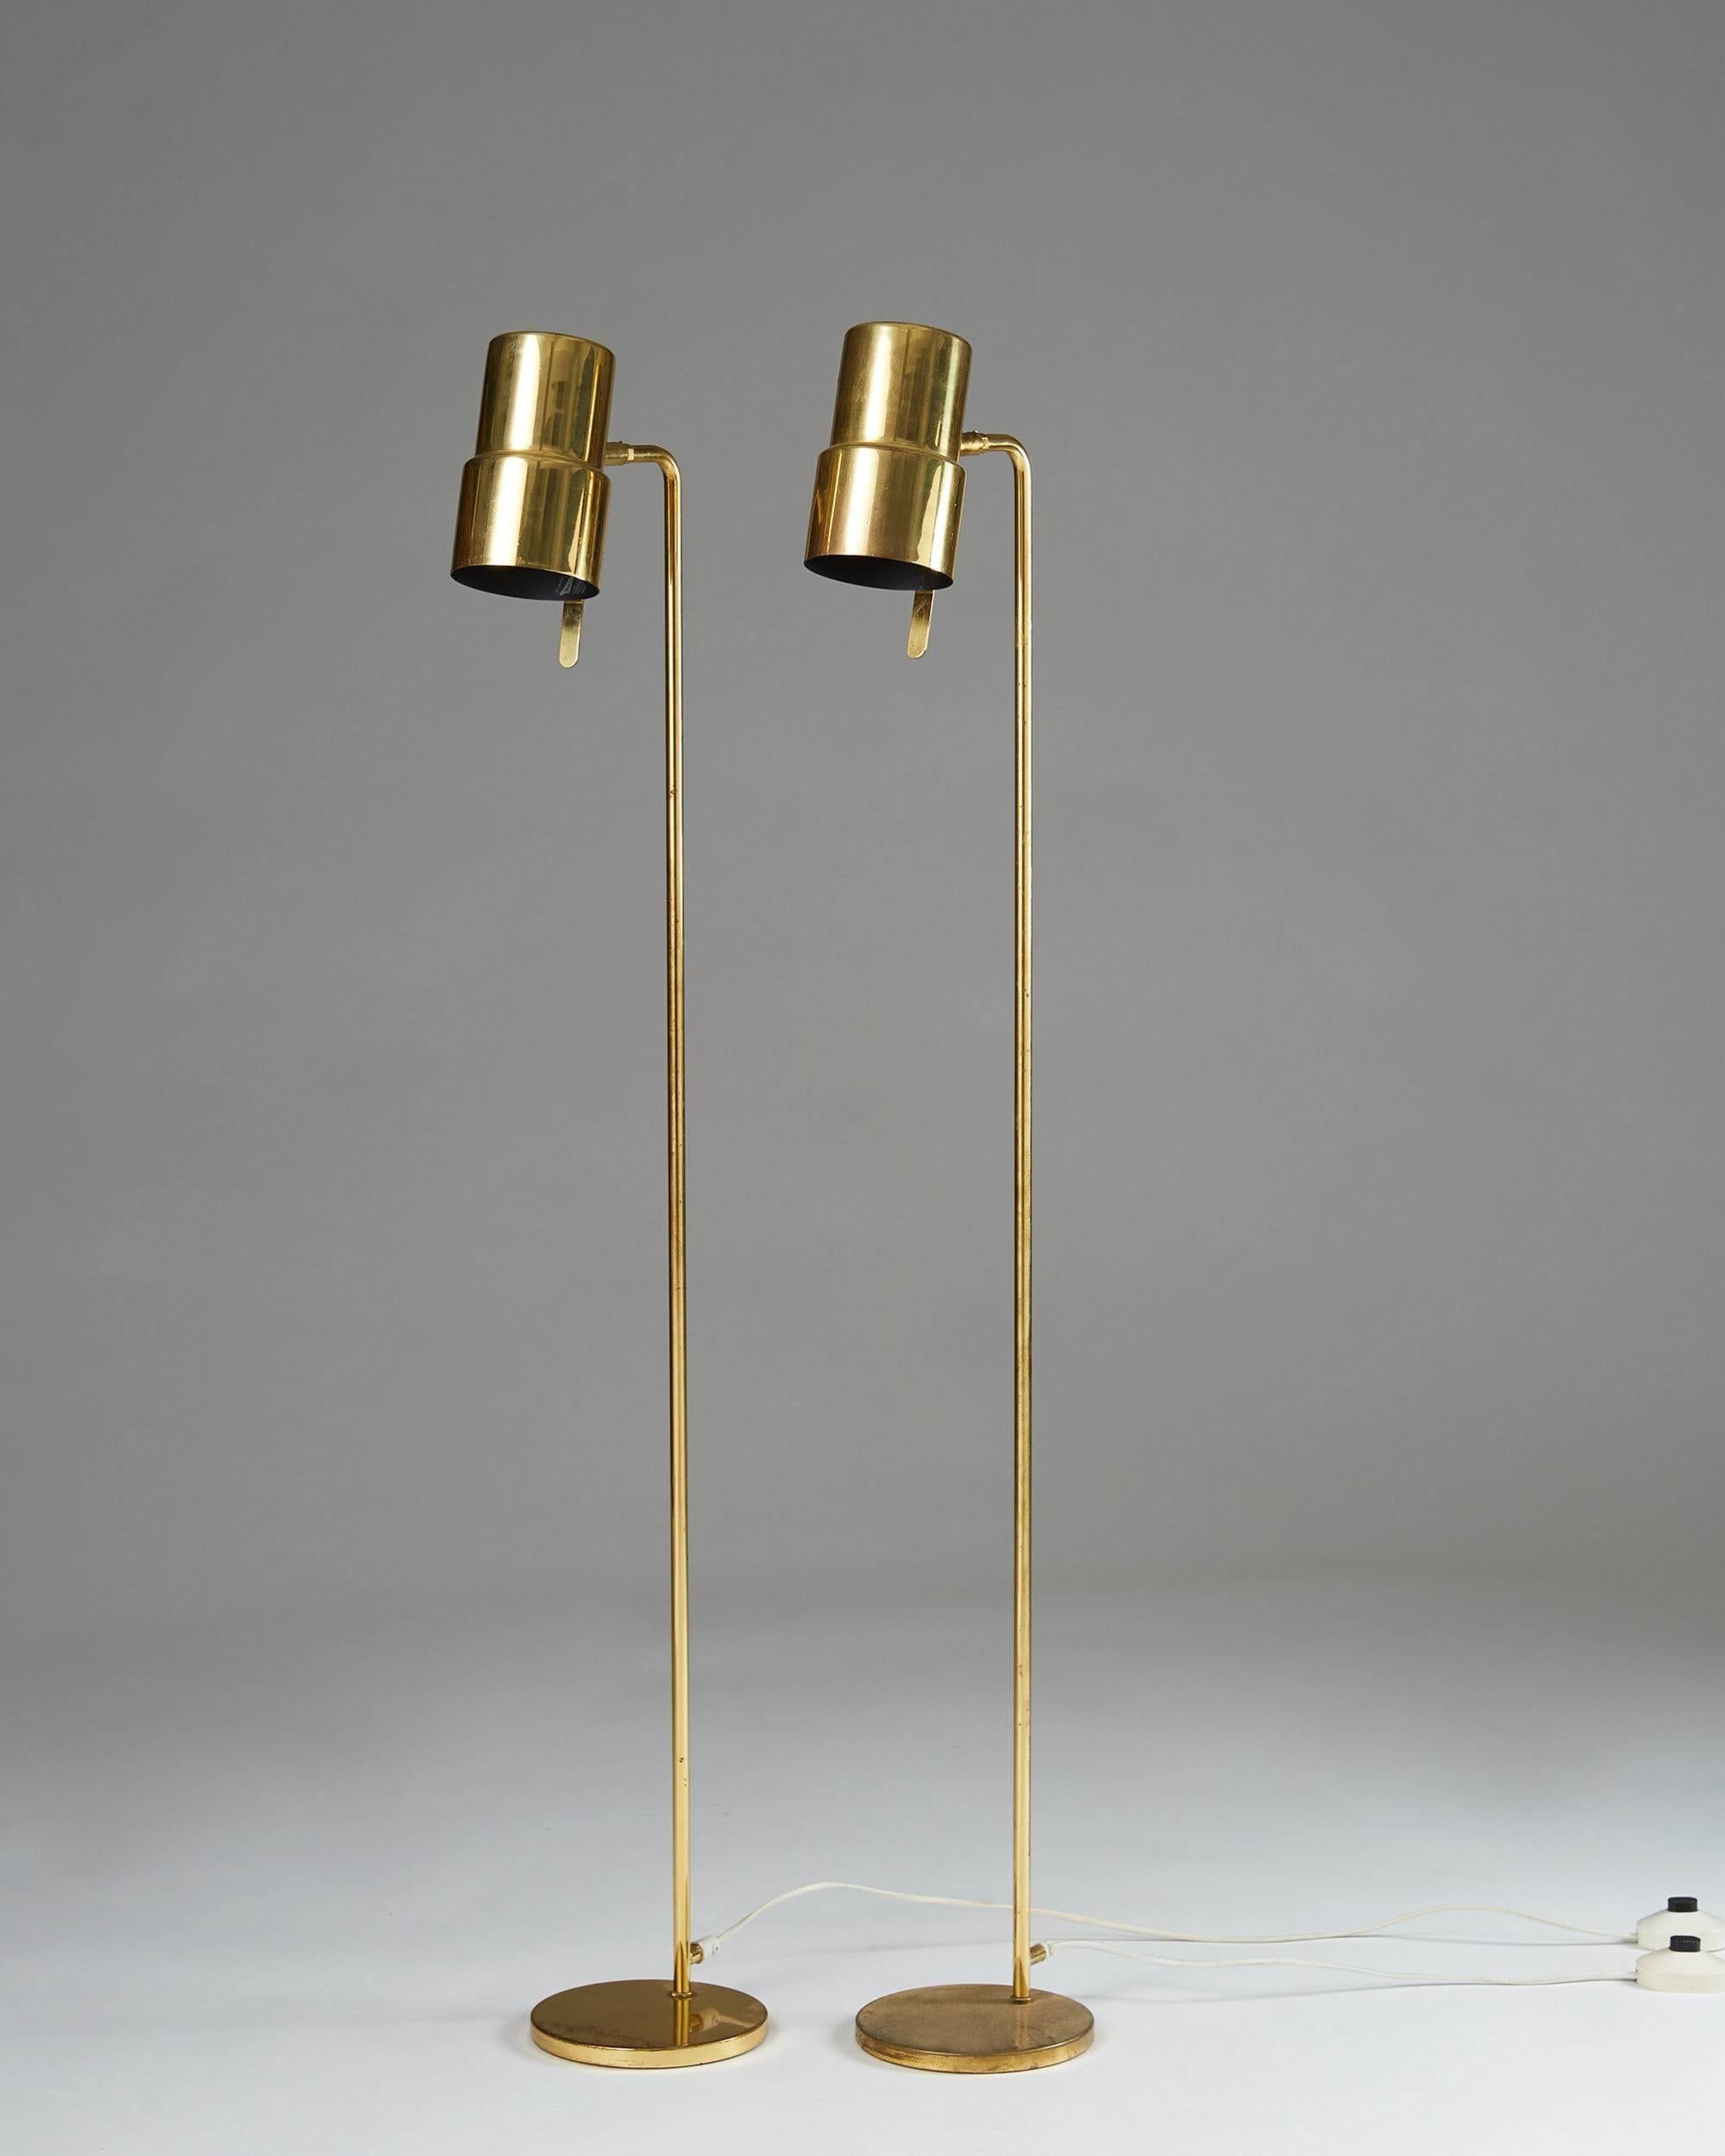 Pair of floor lamps designed by Hans-Agne Jakobsson, Sweden, 1960s. Polished brass.

Measure: H 116 cm/ 3' 9 1/2''.